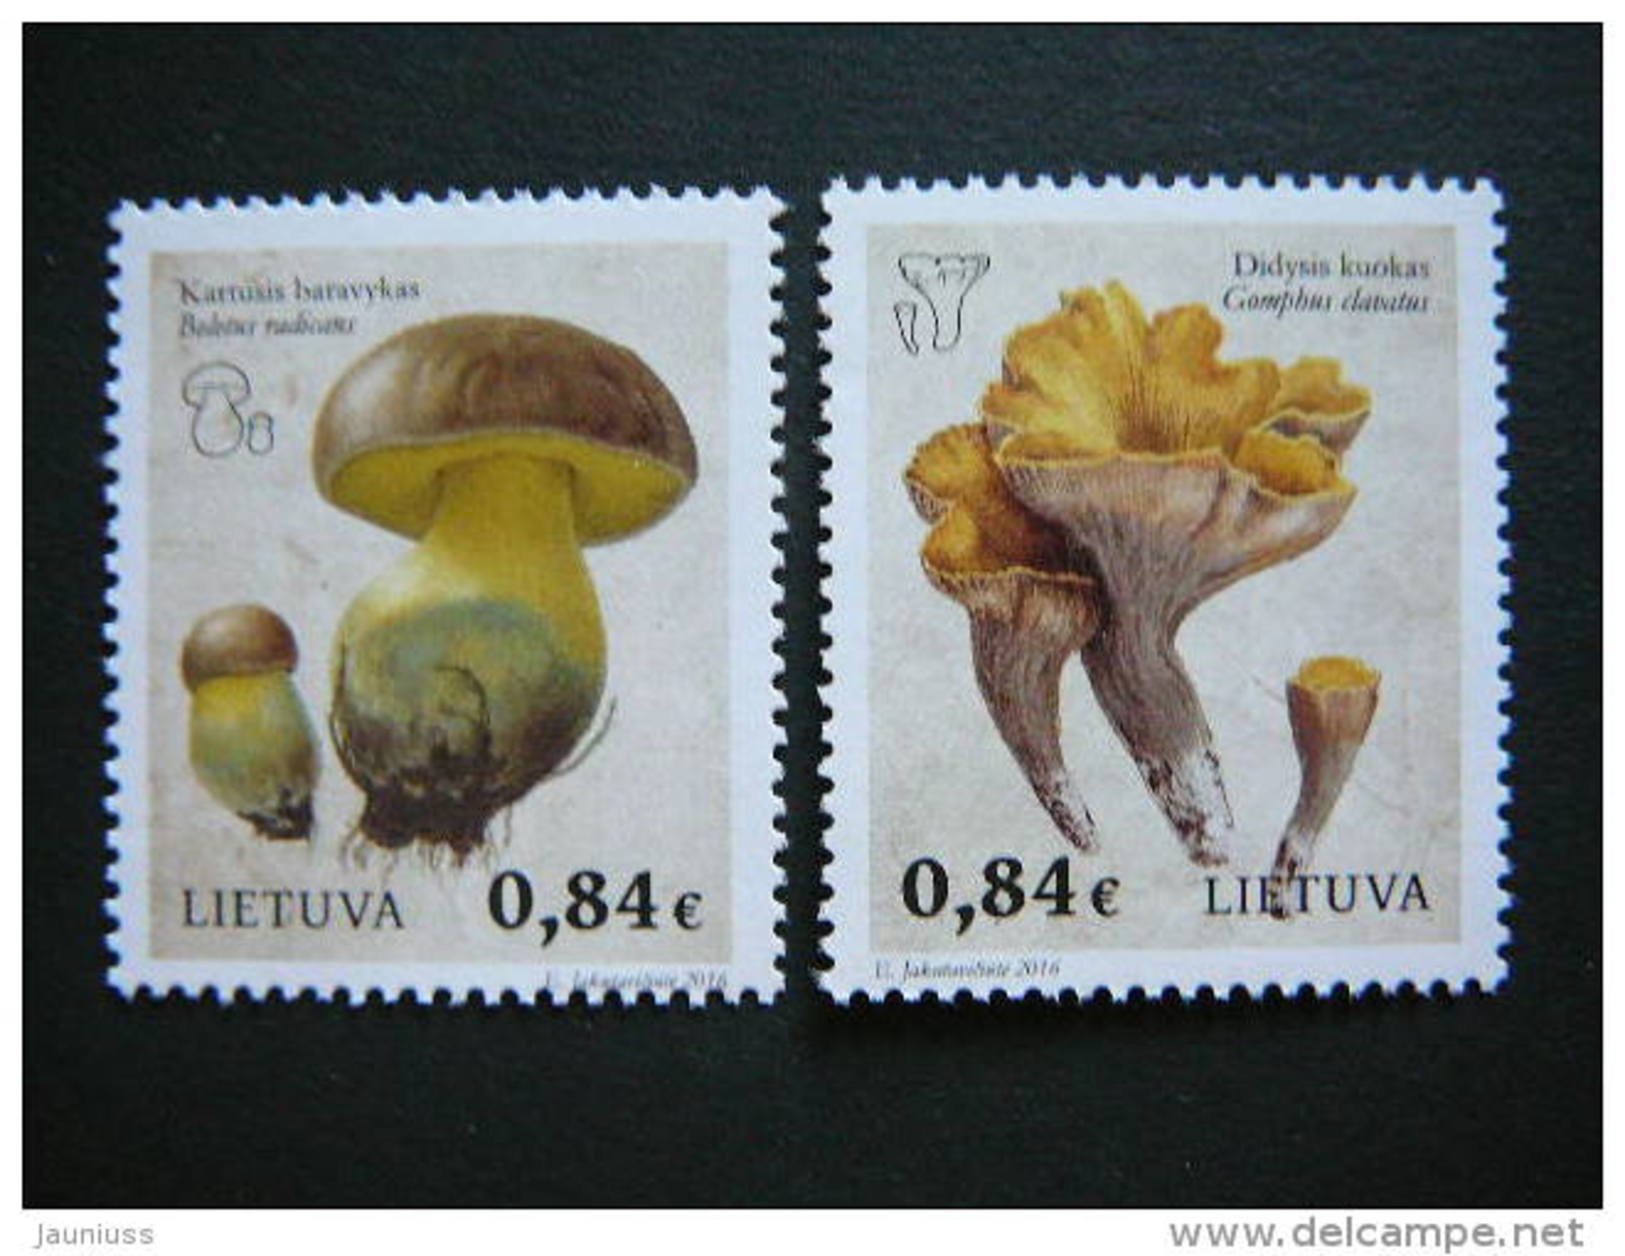 Mushrooms # Lietuva Litauen Lituanie Litouwen Lithuania # 2016 MNH # Mi.1211/2 - Lithuania